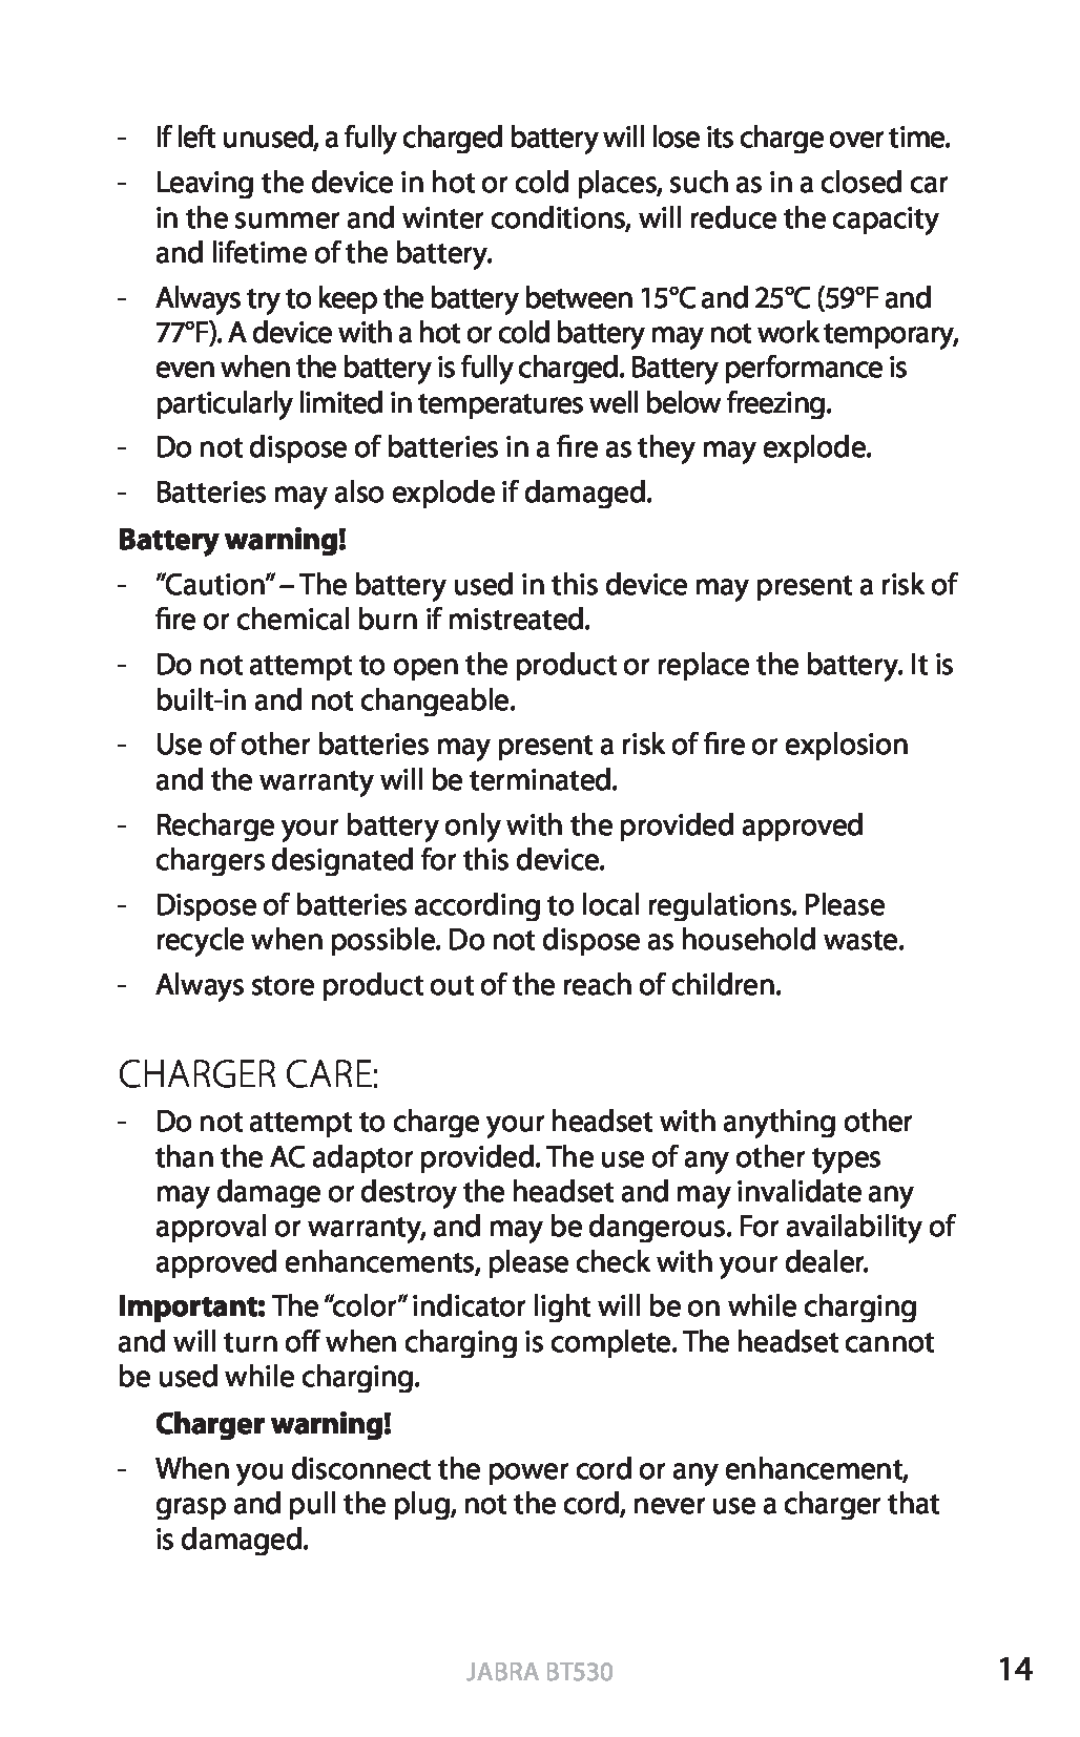 Jabra BT530 user manual Charger Care, Battery warning, Charger warning, english 